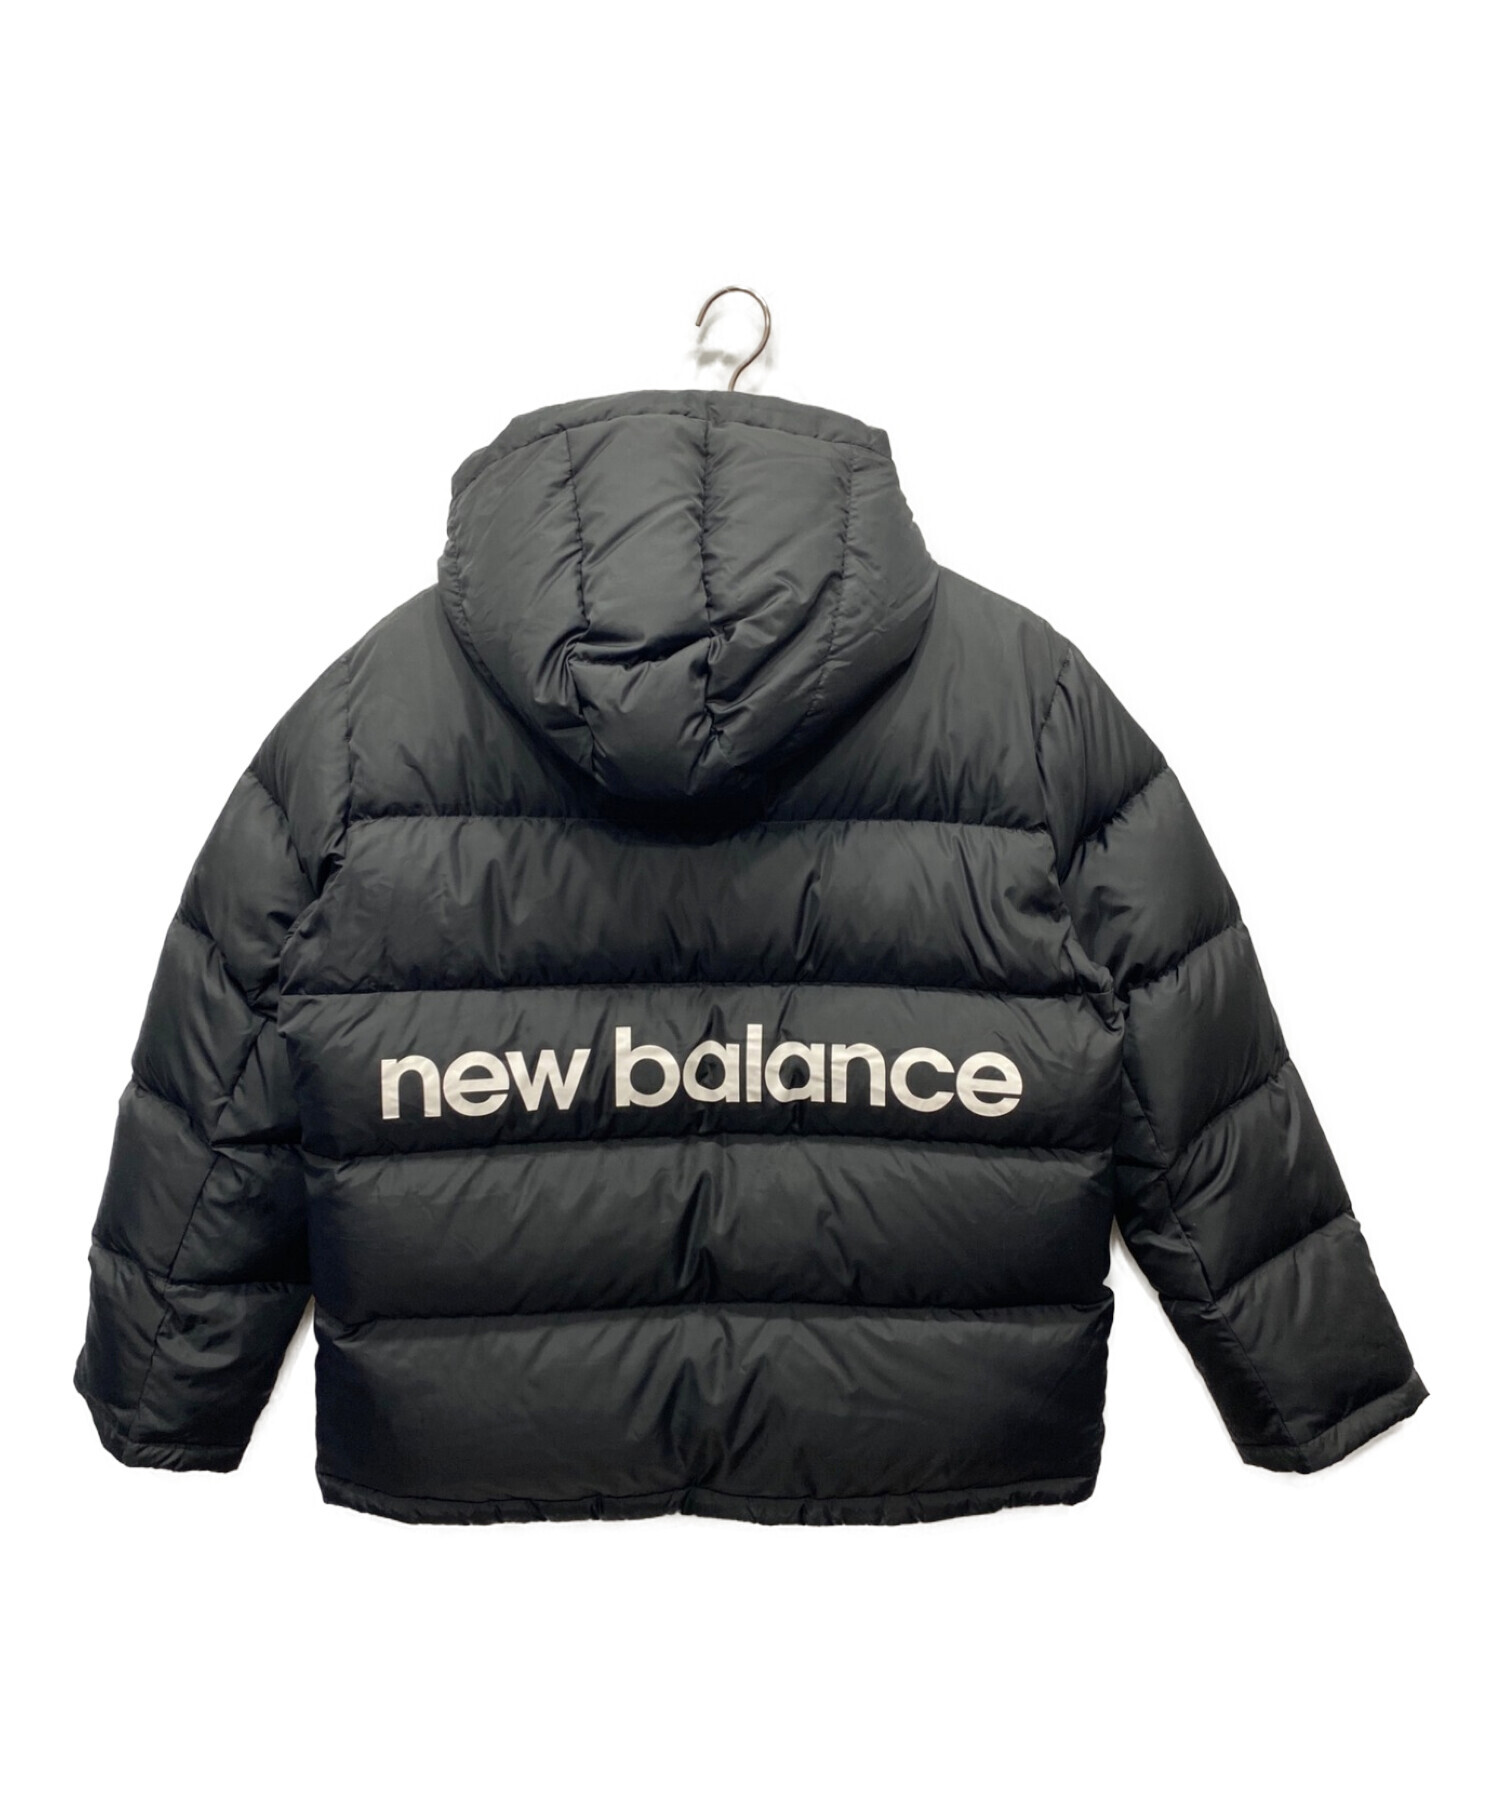 NEW BALANCE (ニューバランス) ダウンジャケット ブラック サイズ:L